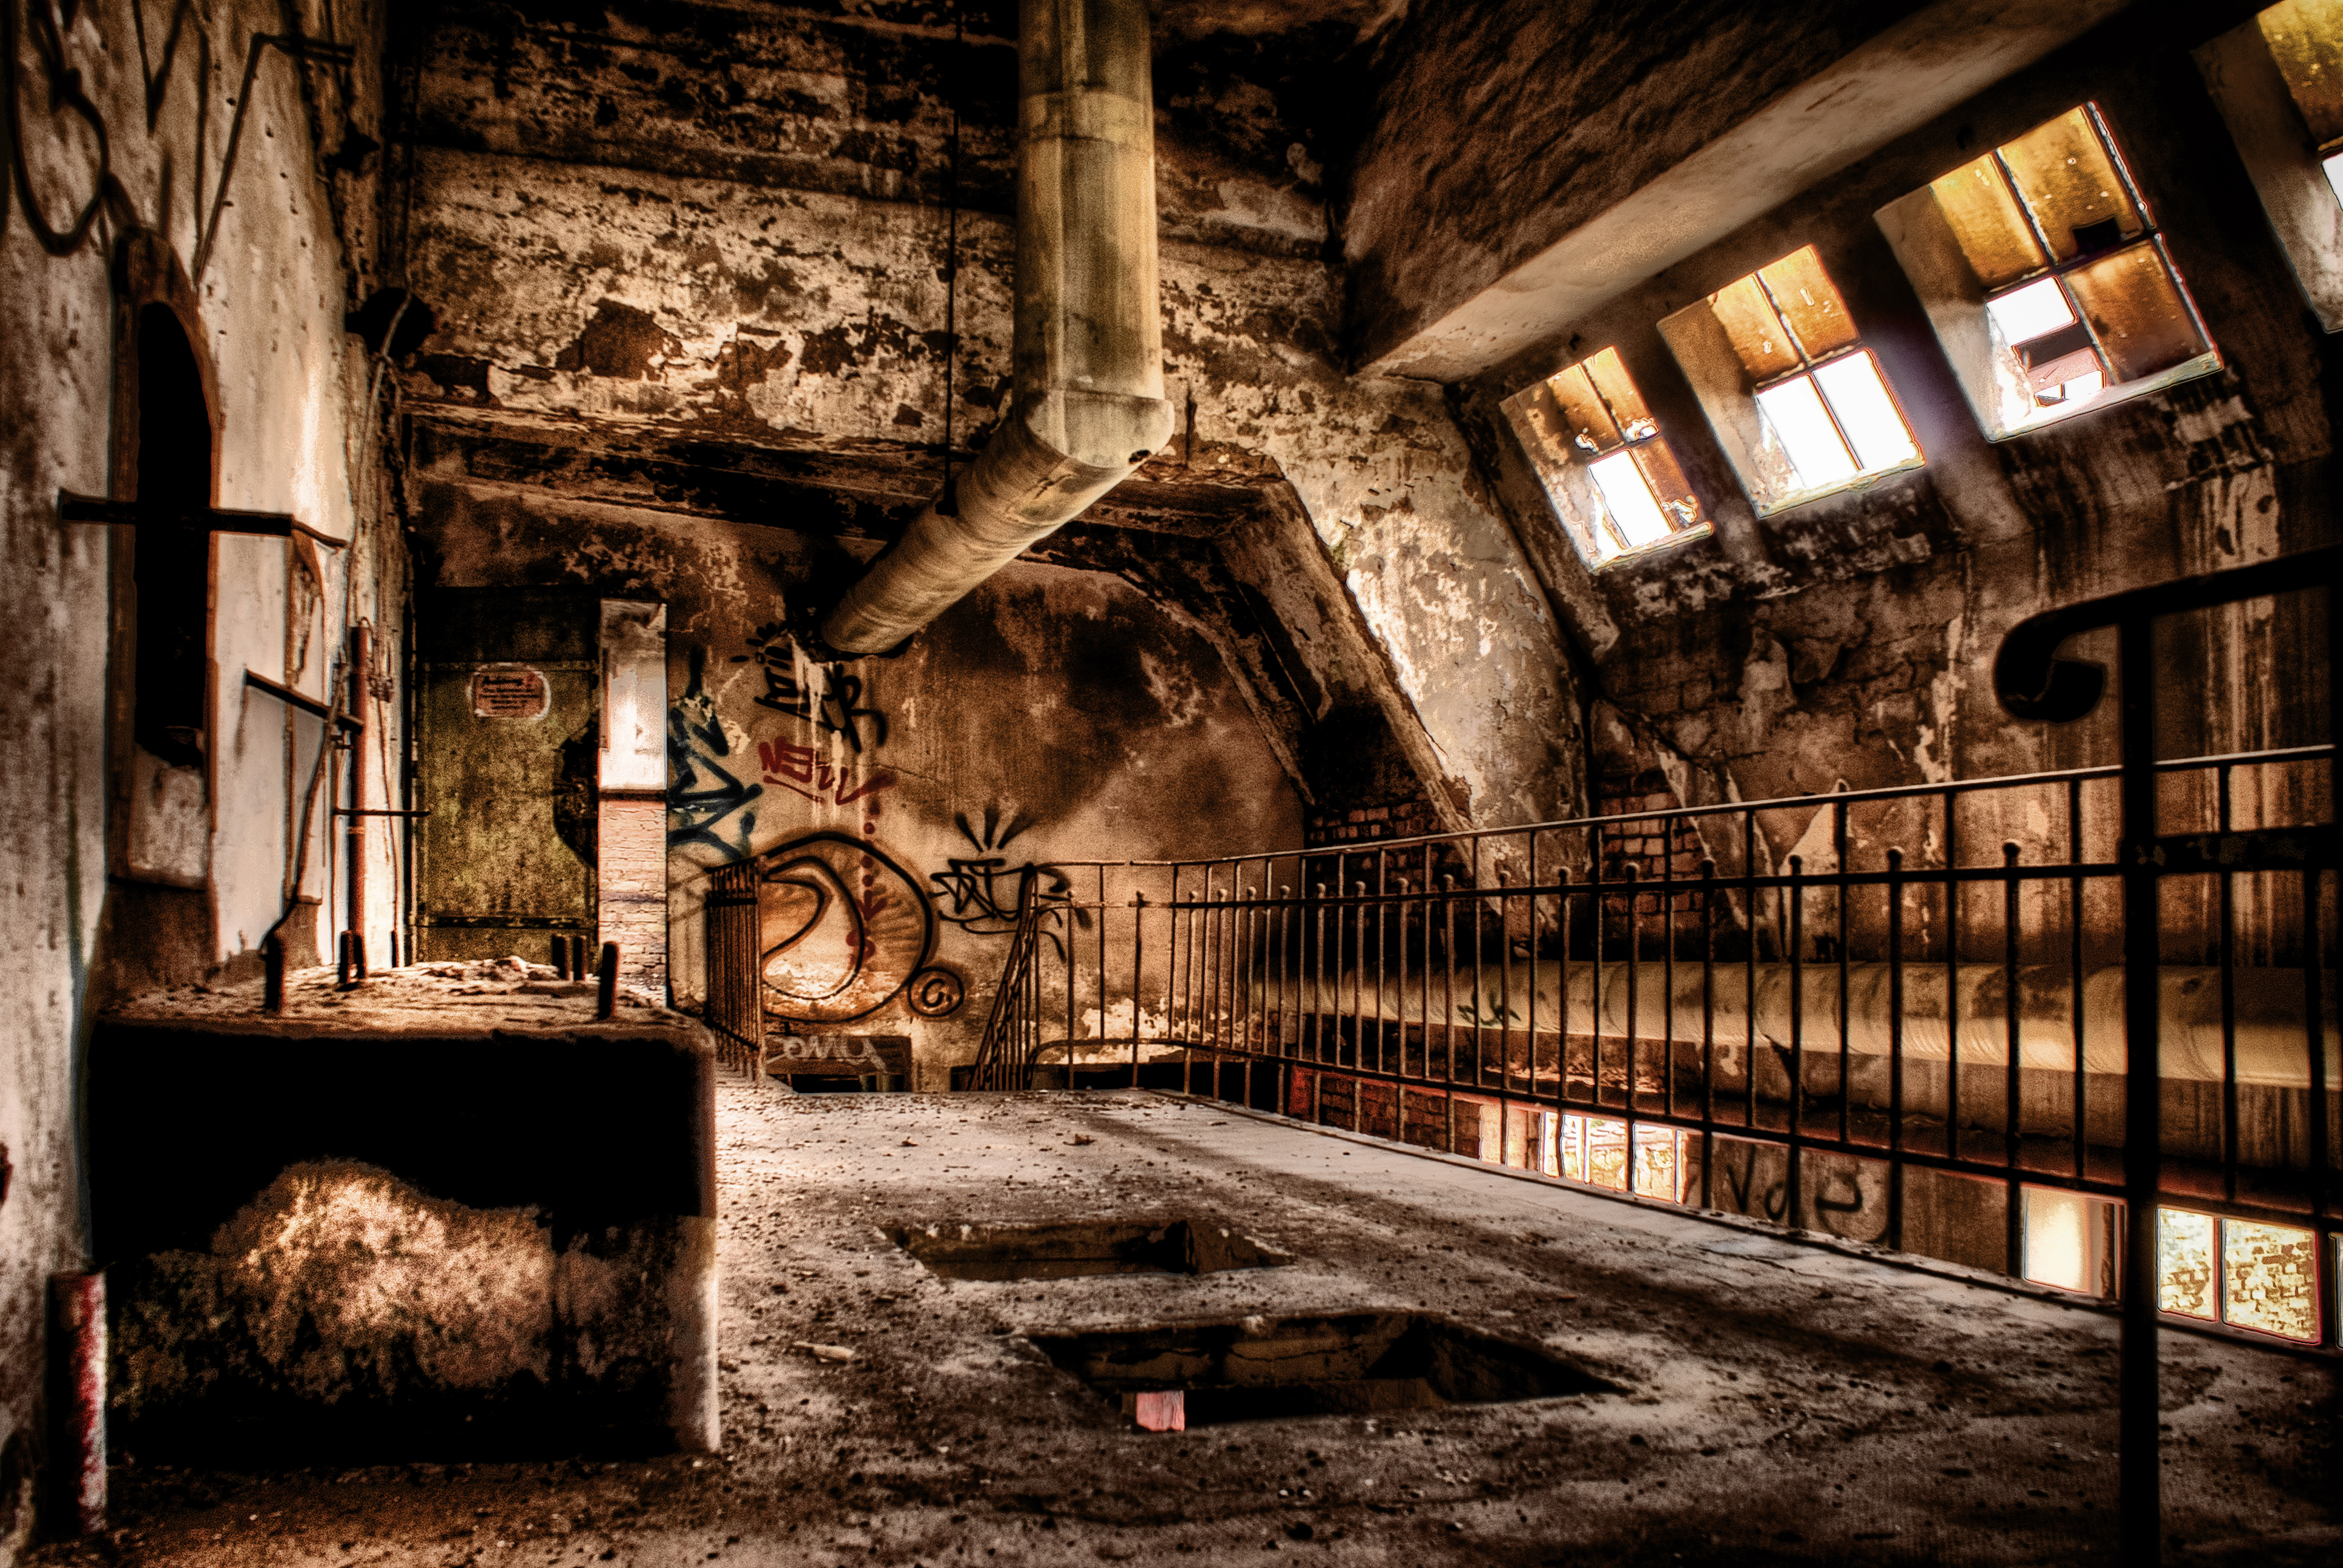 abandoned: interiors | eyesOfOdysseus